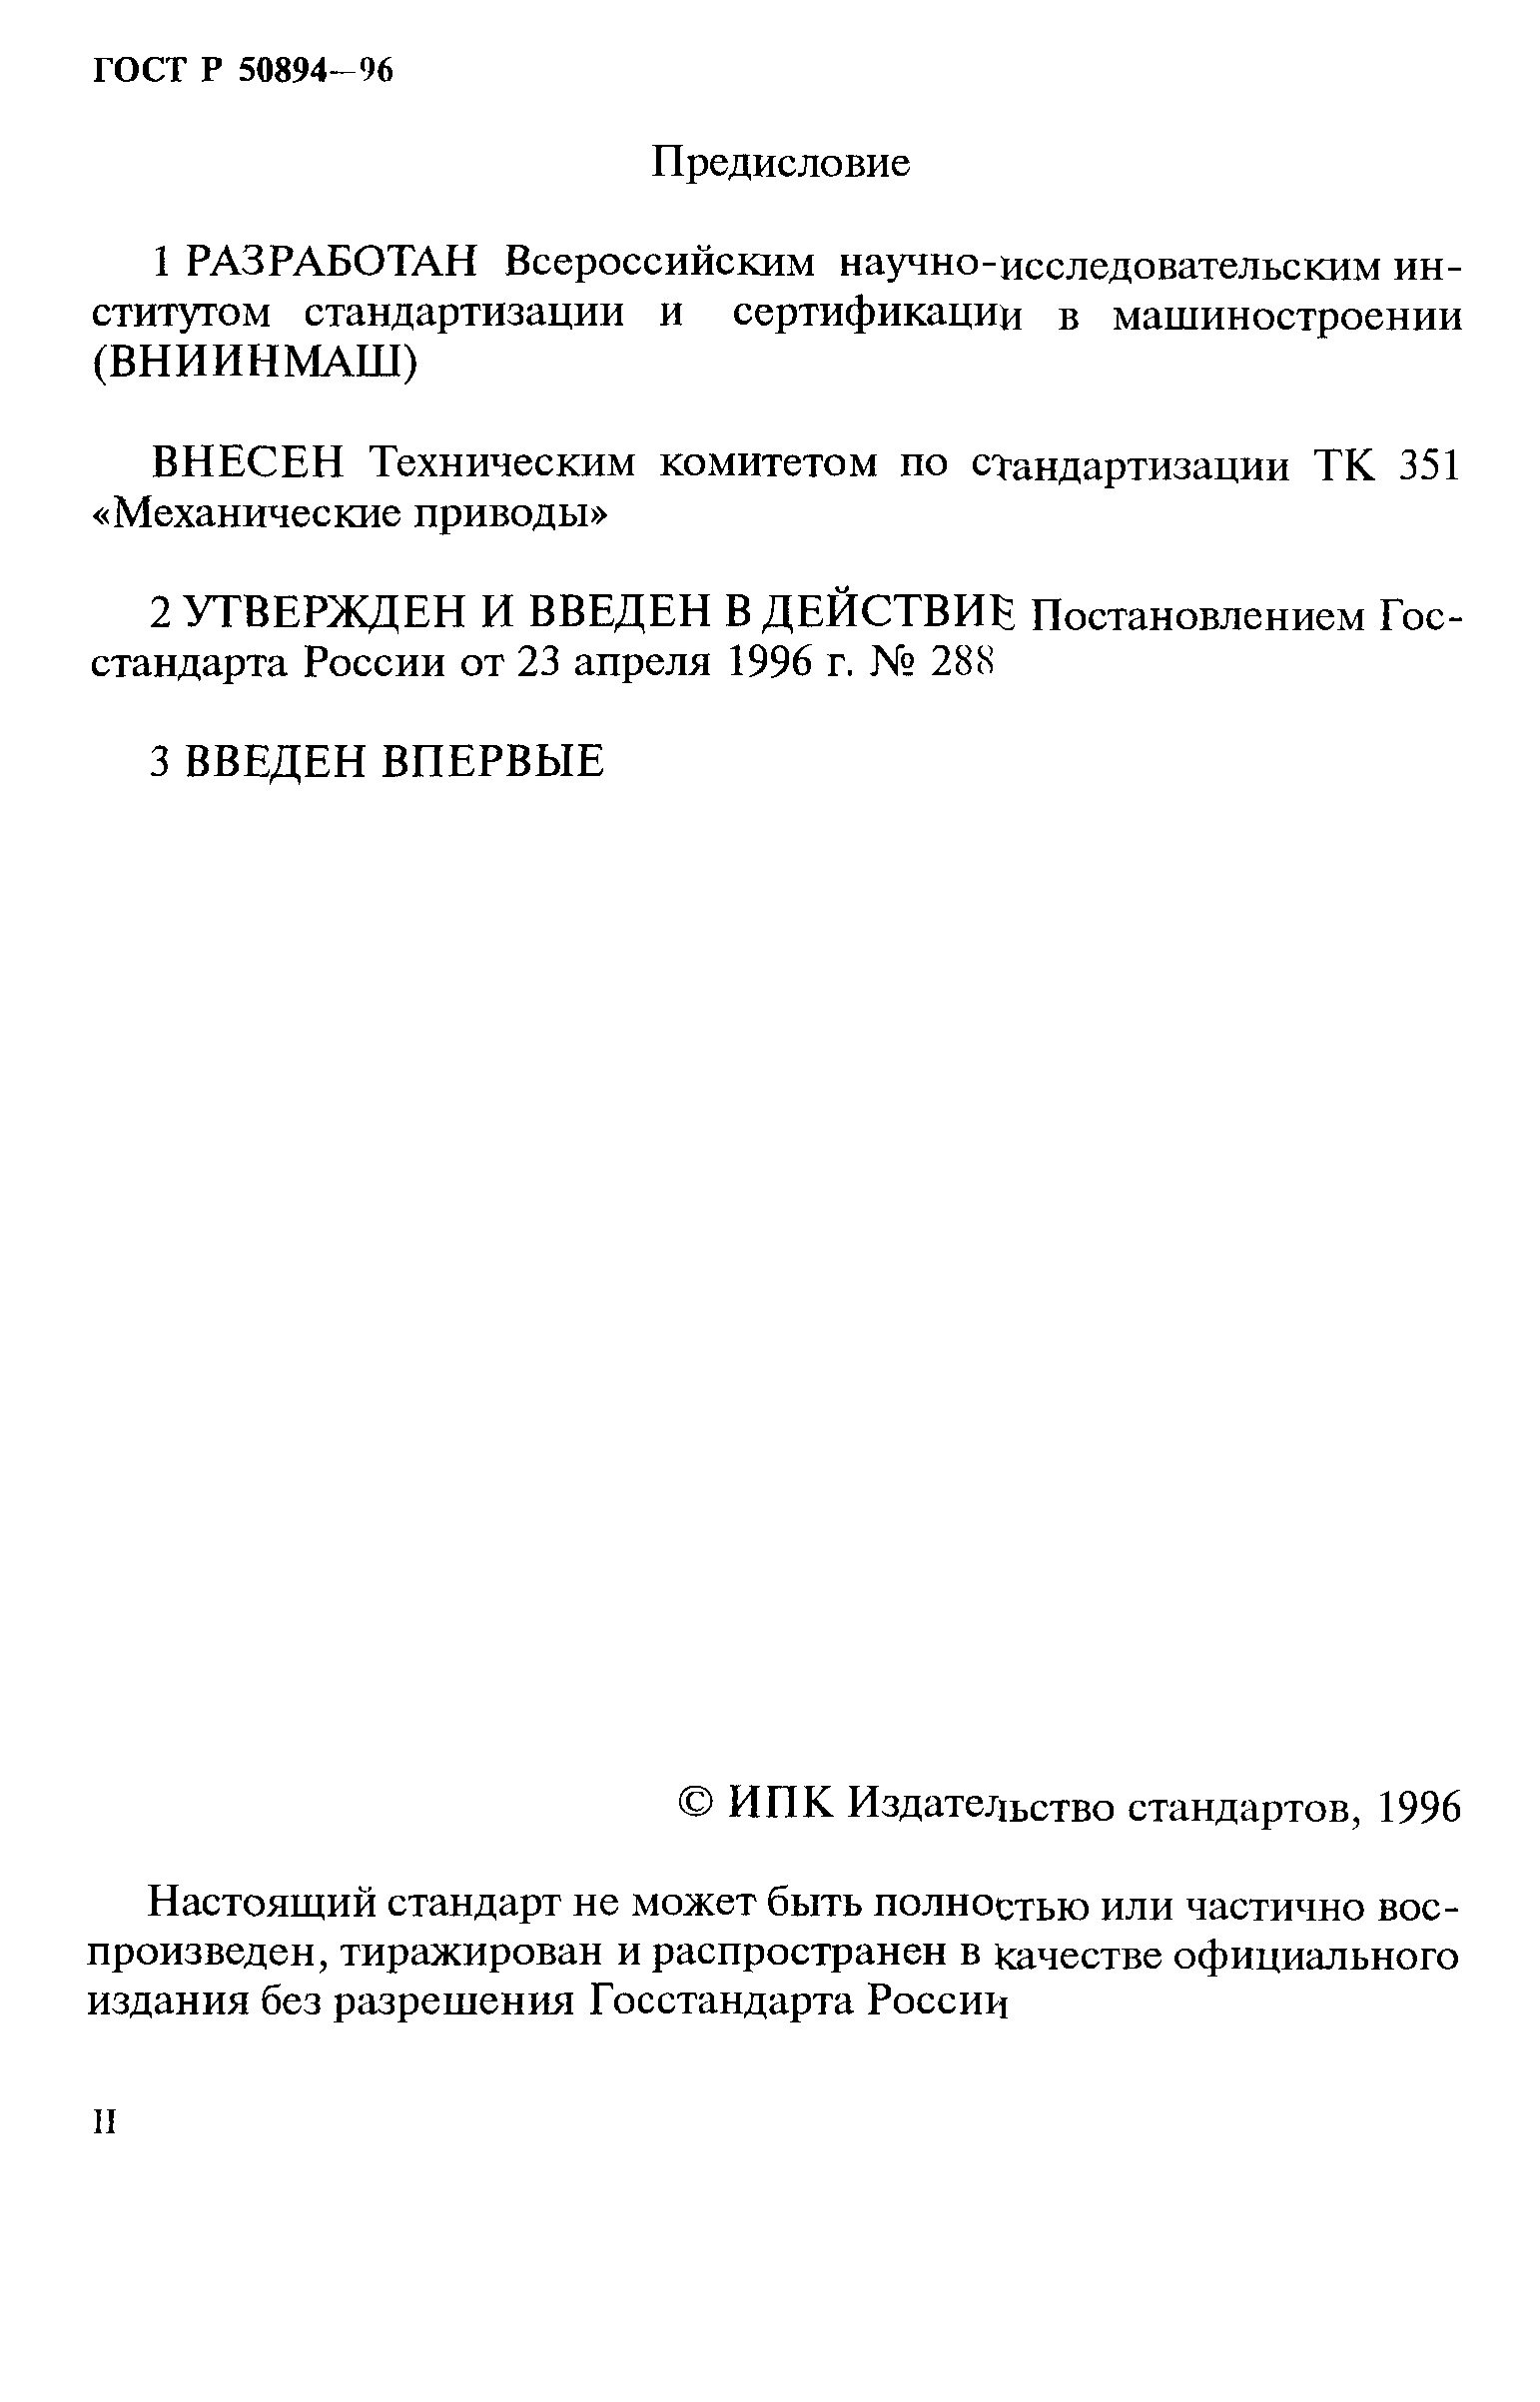 ГОСТ Р 50894-96